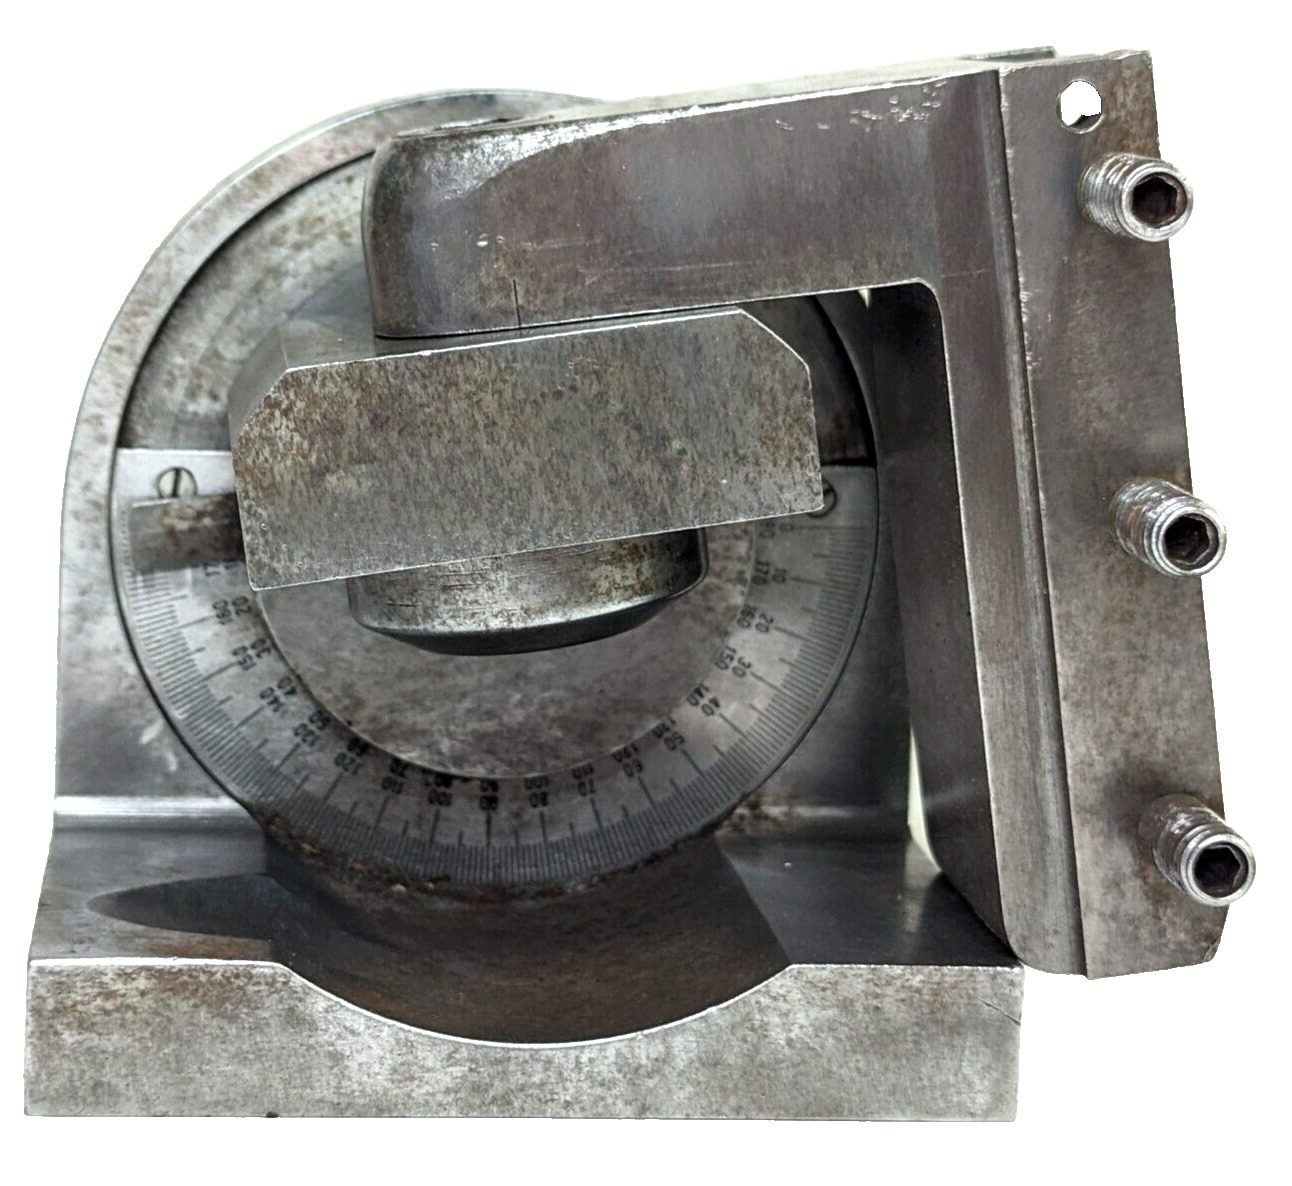 Machinist Lathe adjustable tool holder with indicator